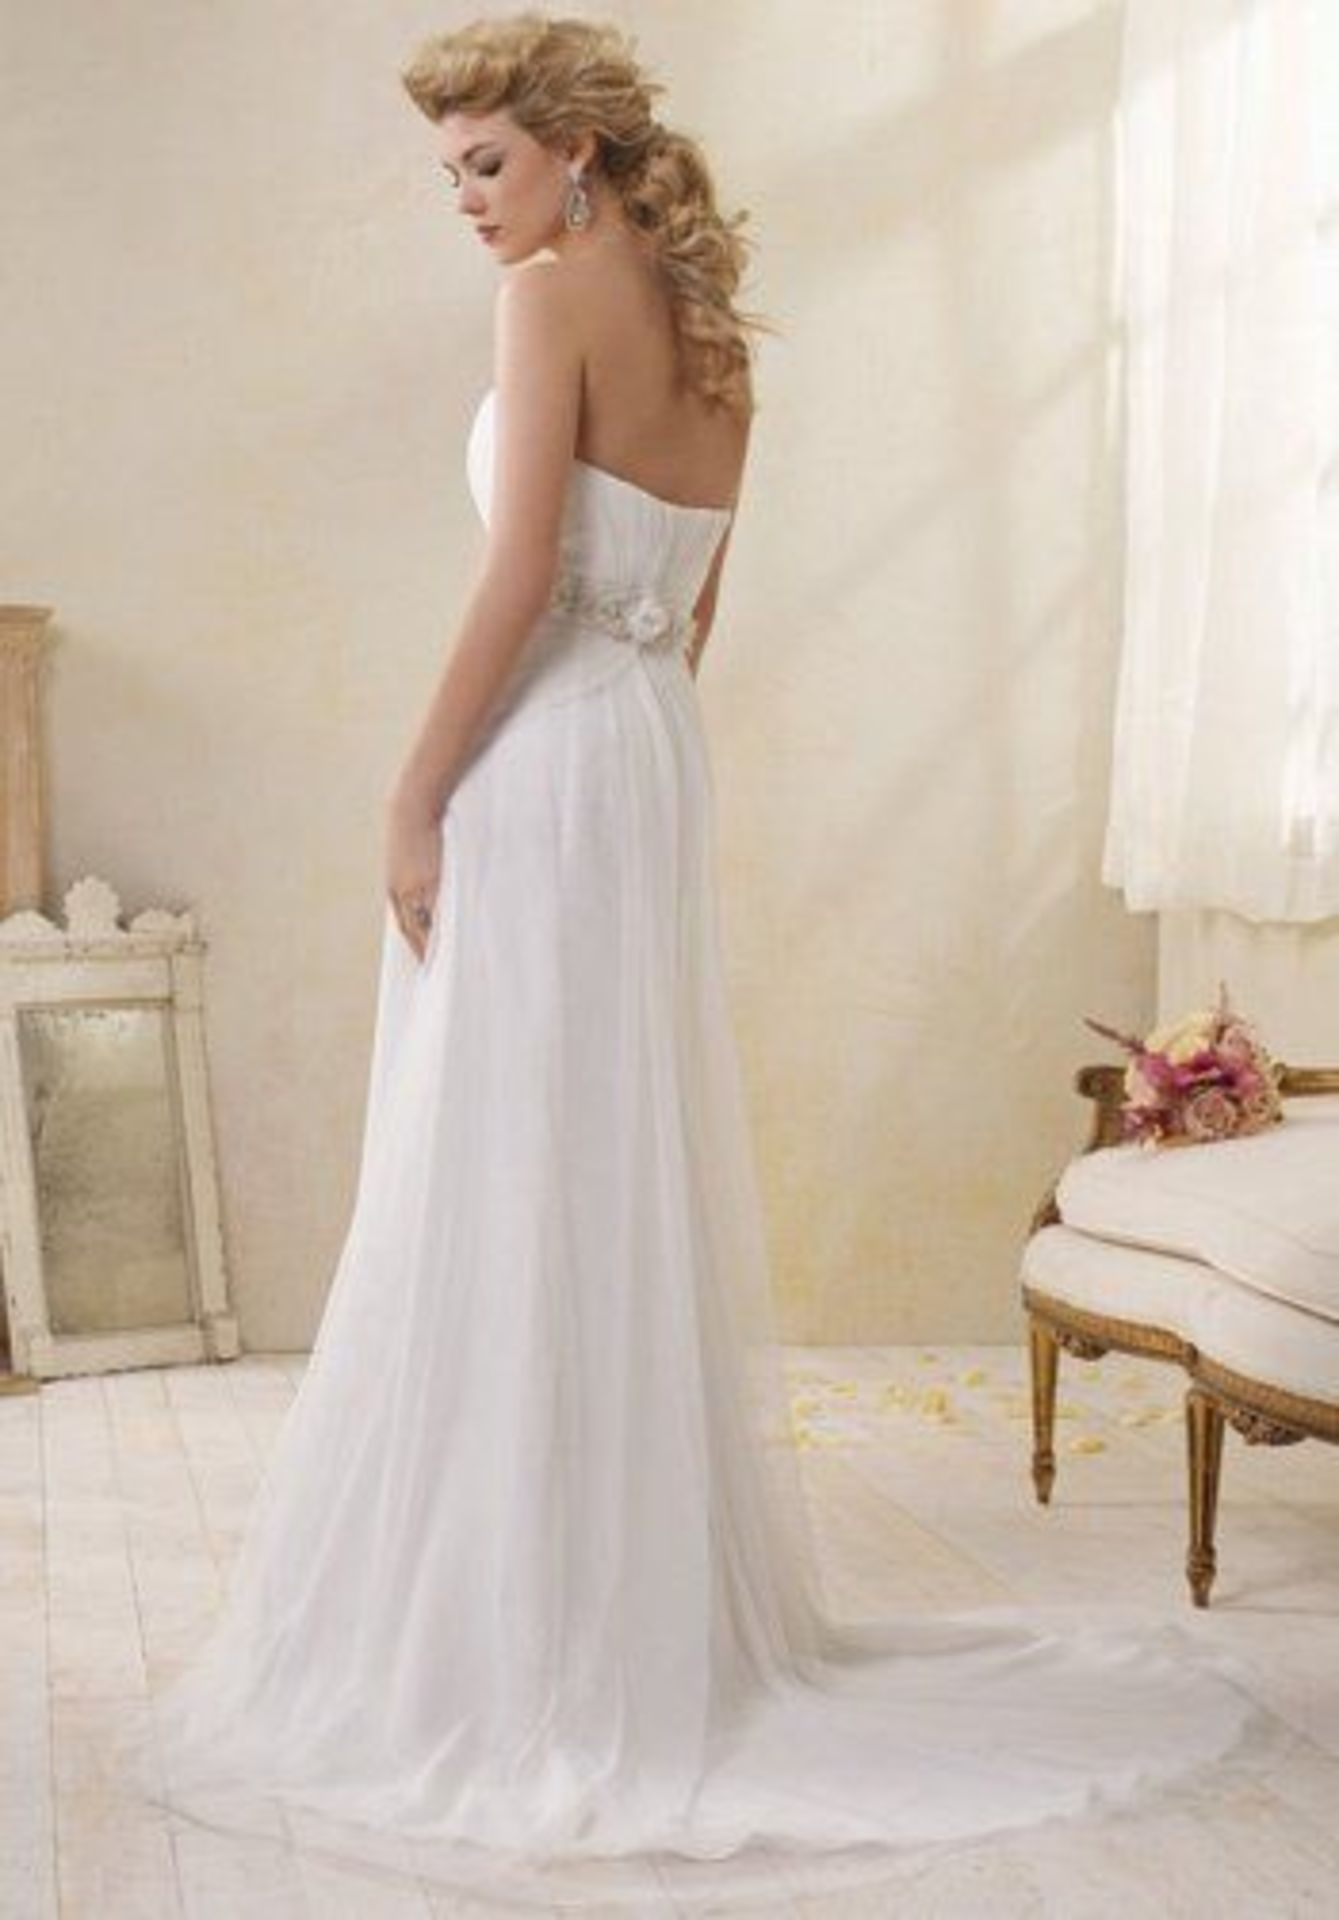 80 x Various Ex-Display Wedding Dresses - Brands inc: LadyBird, White Rose & Lillian West - Image 8 of 60